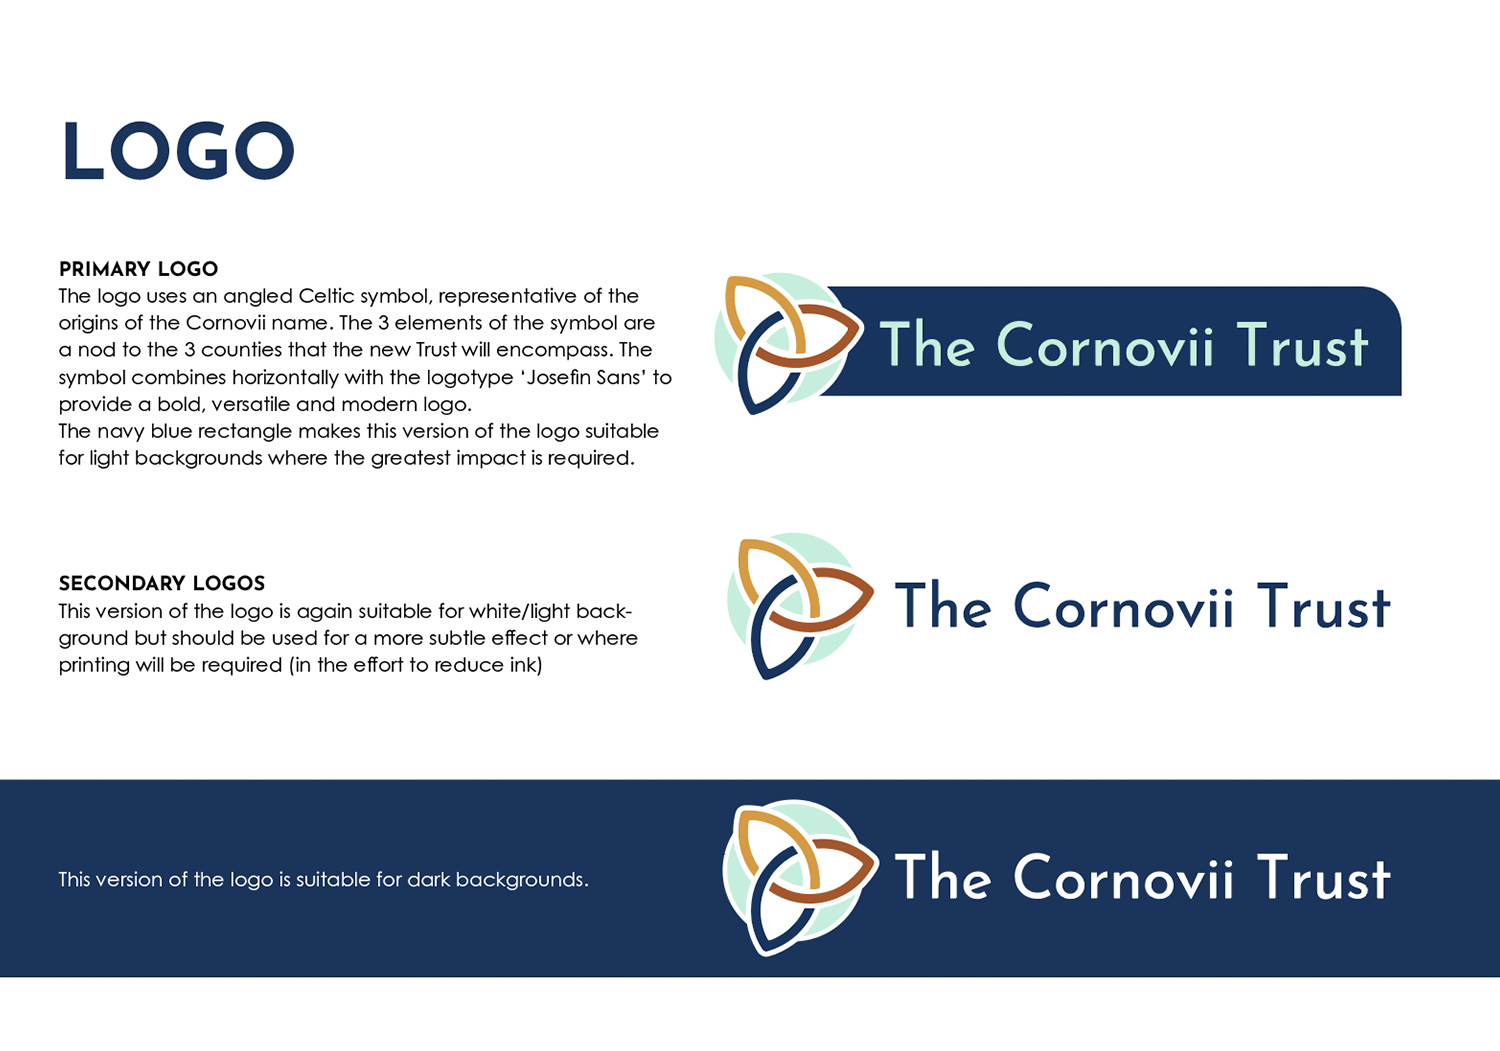 The Cornovii Trust logo design